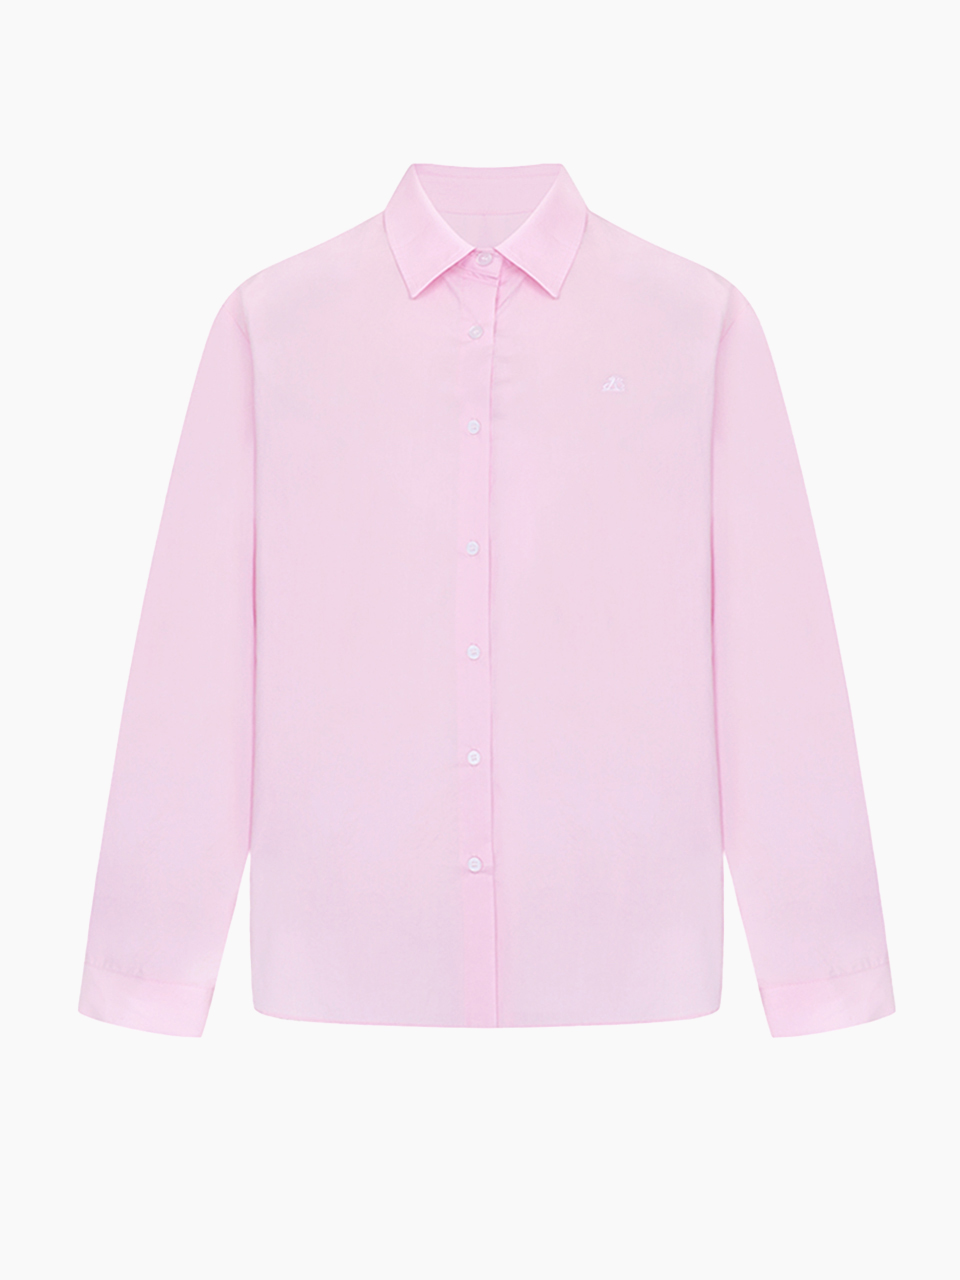 Classic overfit logo shirts - pink